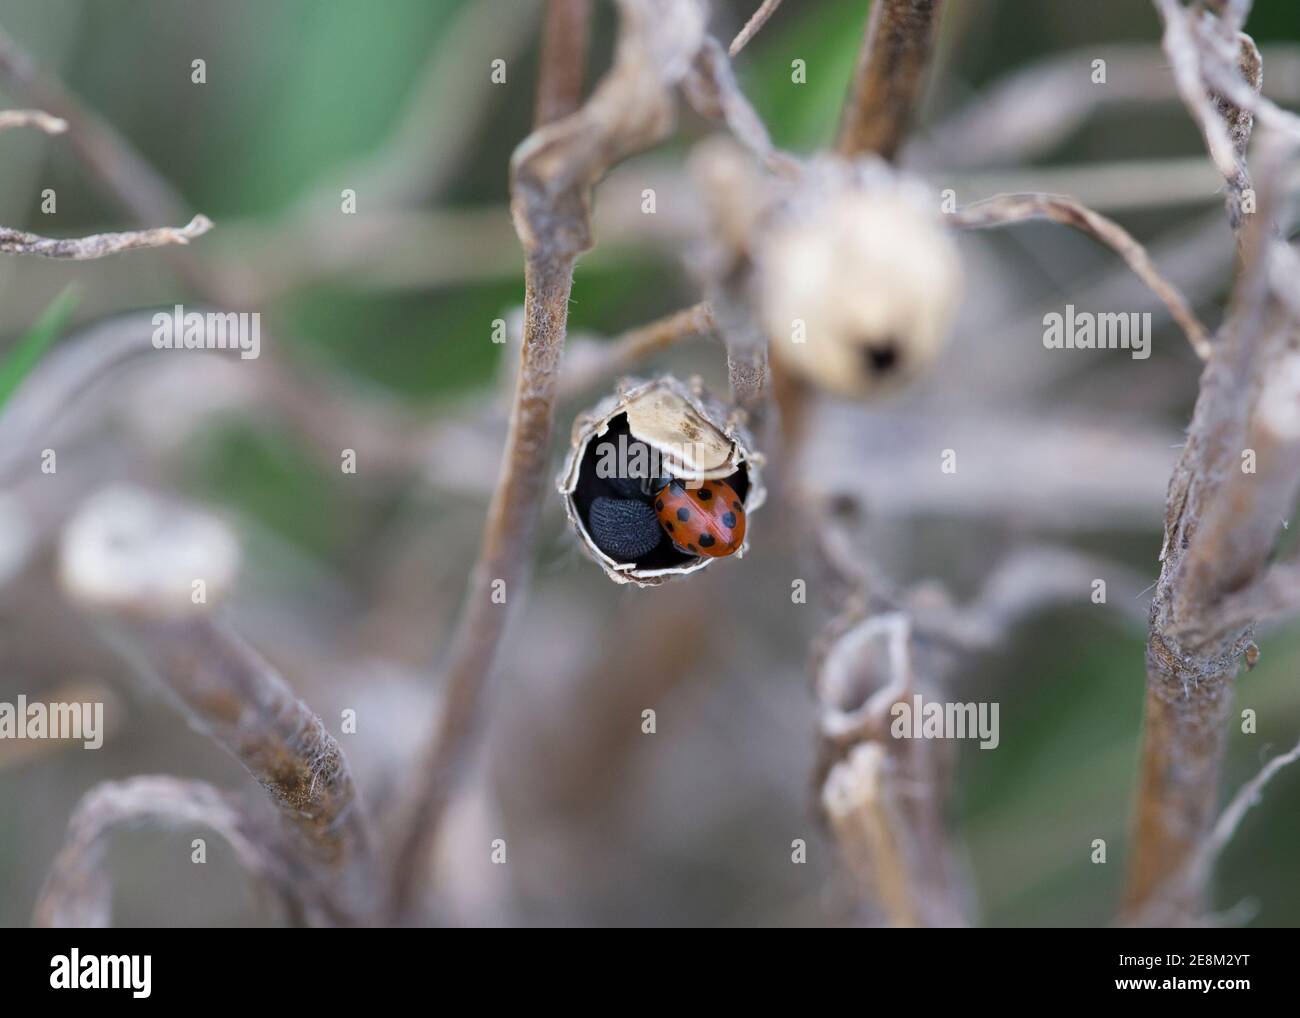 11 spot ladybird enters corncockle seed capsule to hibernate or shelter. Stock Photo